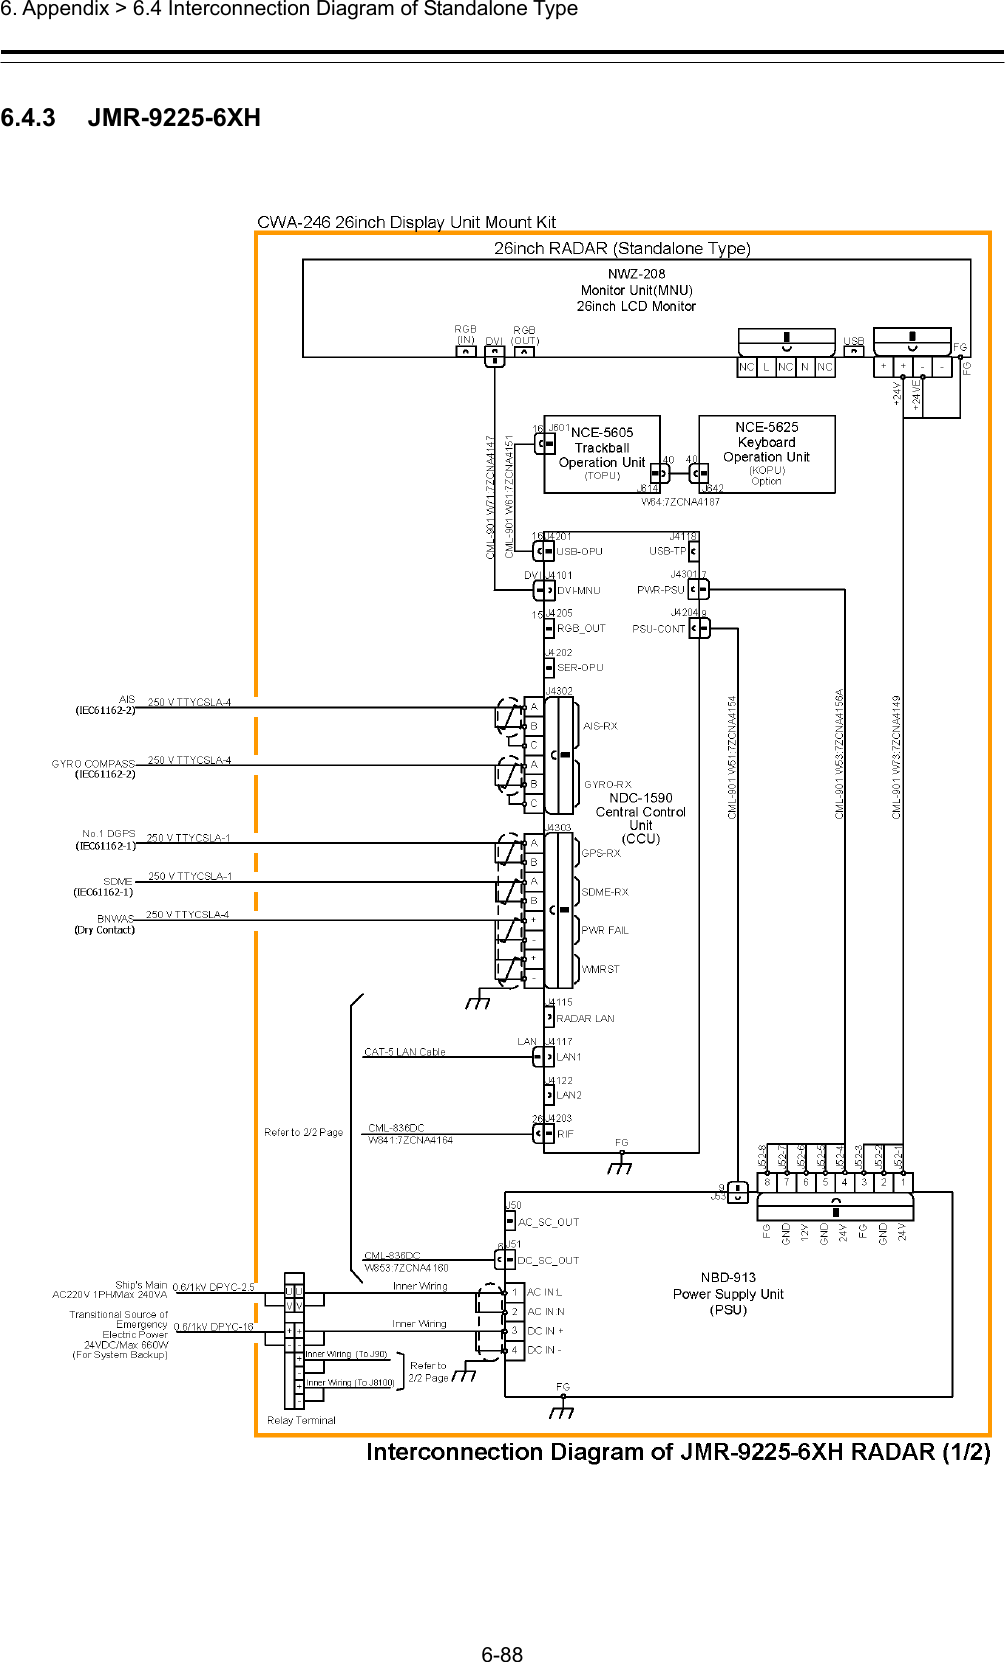  6. Appendix &gt; 6.4 Interconnection Diagram of Standalone Type 6-88  6.4.3   JMR-9225-6XH 